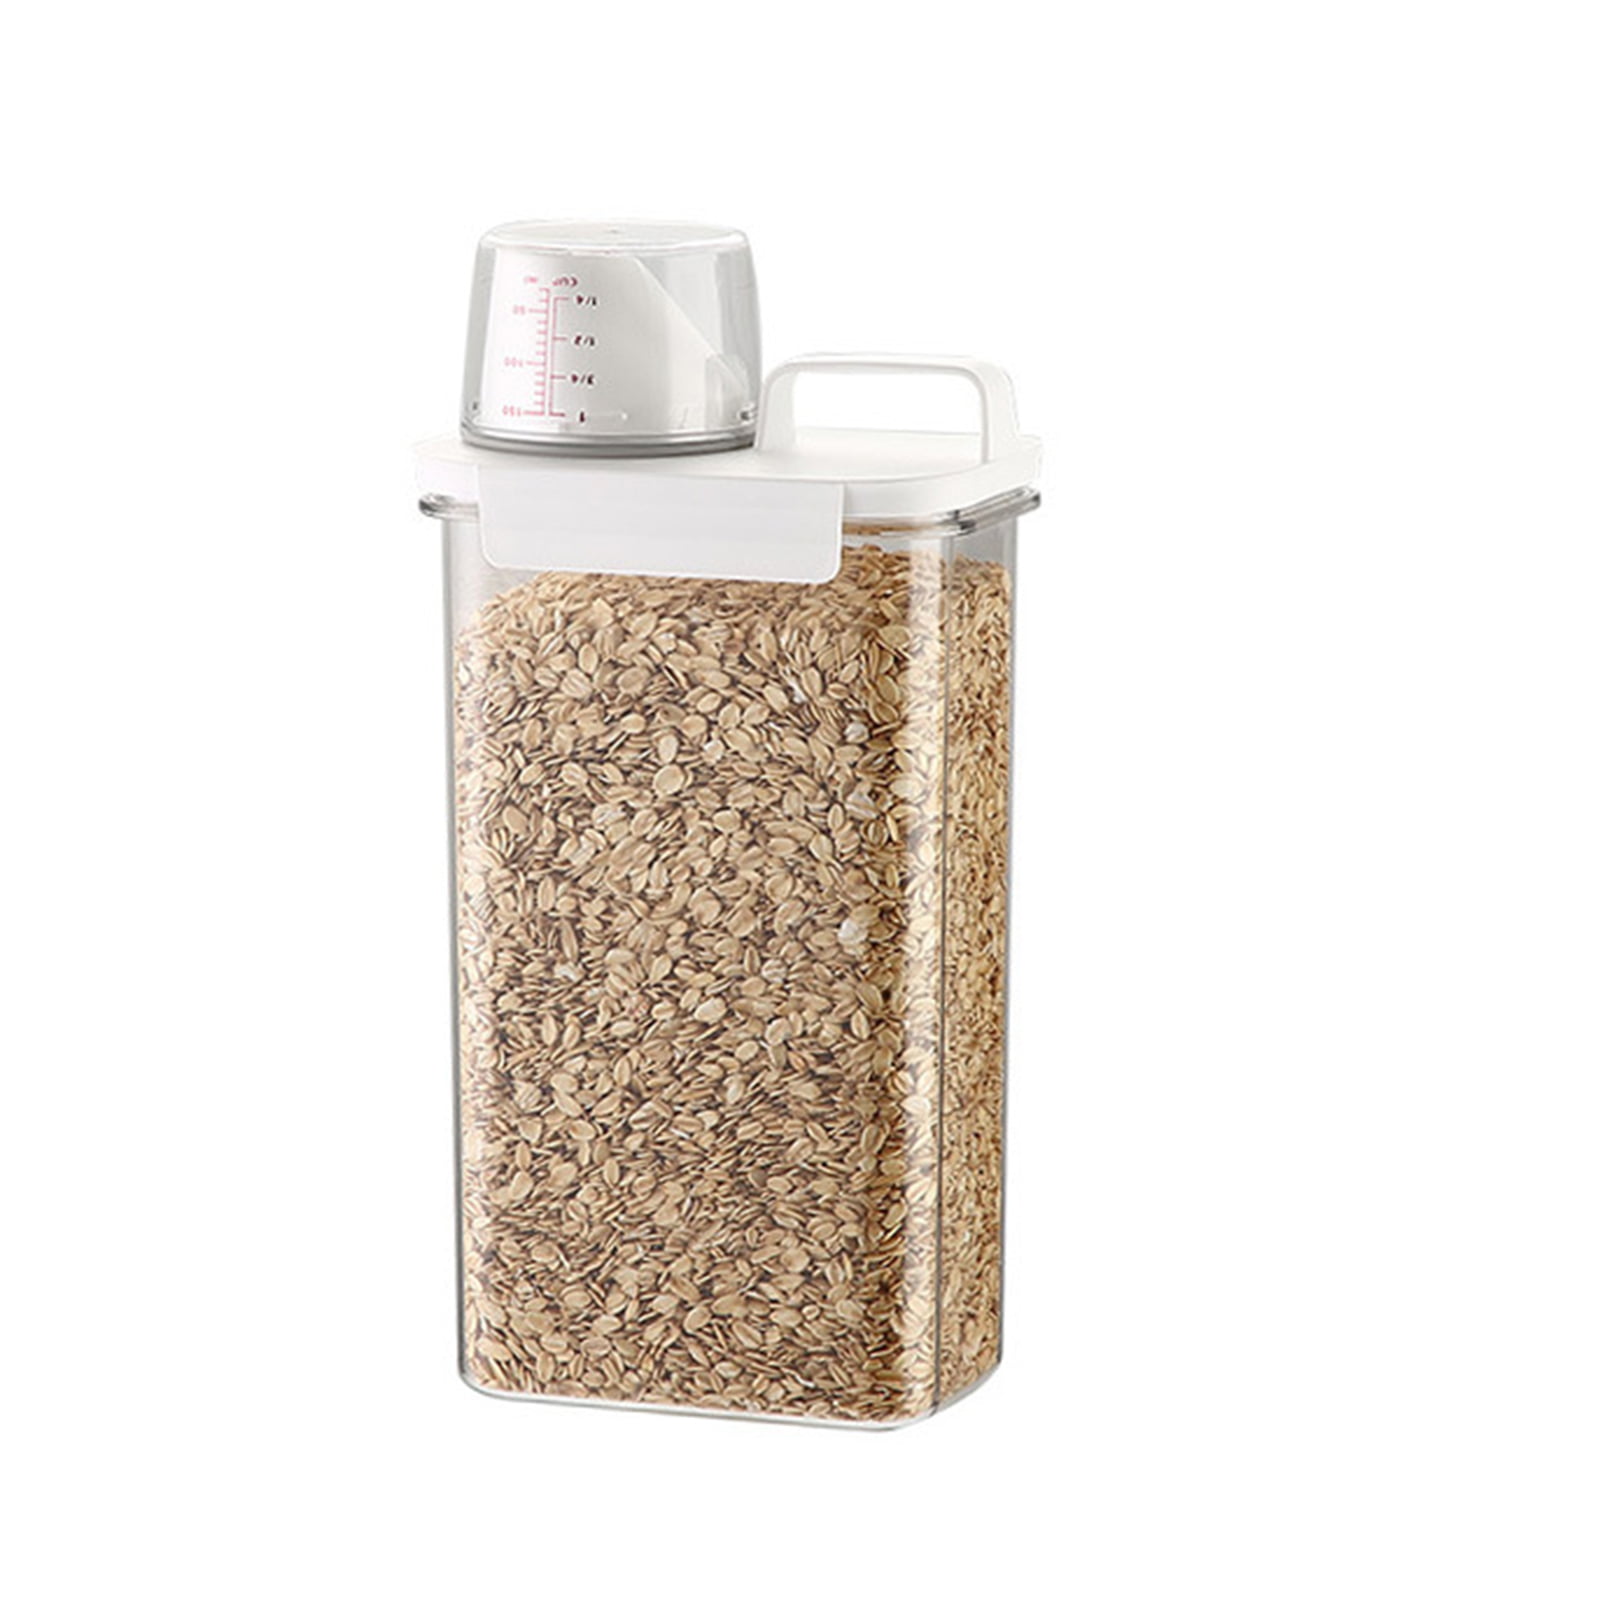 Yesbay 2000ml/2800ml Cereal Storage Box Transparent Large Diameter Sealed Space-Saving Moisture-proof Handle Design Oatmeal Dispenser Food Grain Rice